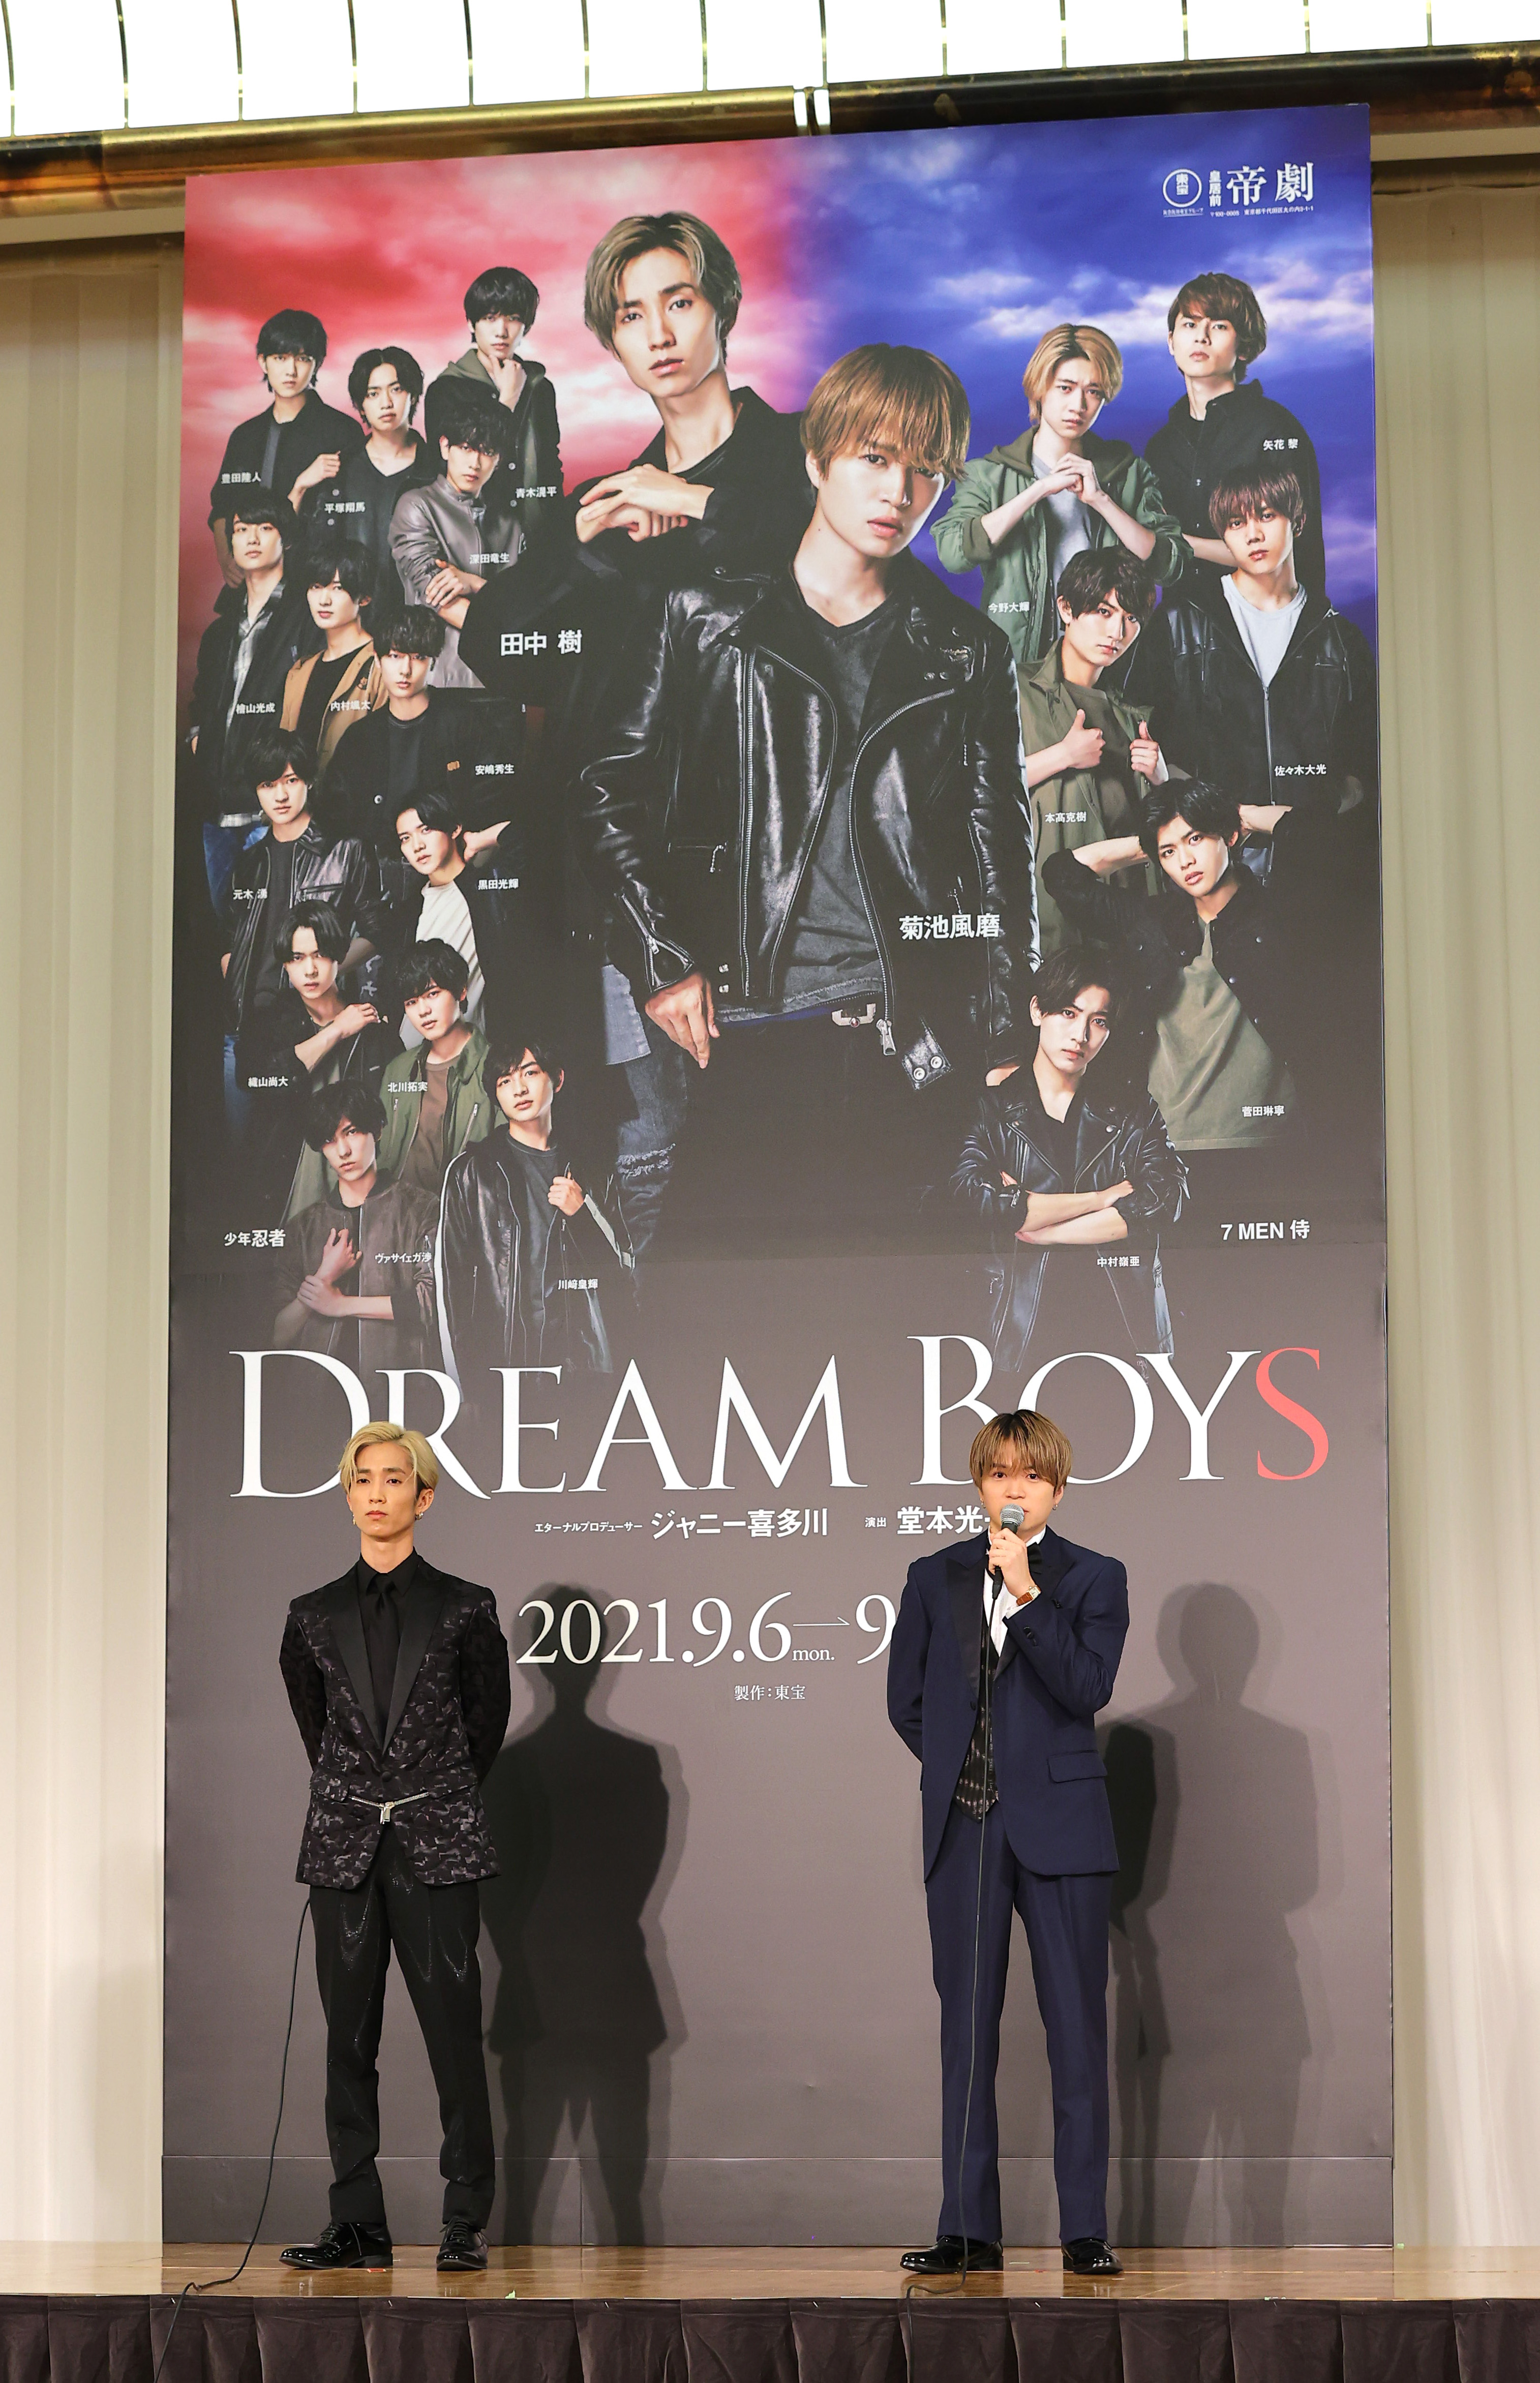 DREAM BOYS 菊池風磨 田中樹 DVD ドリボ 2021 ジャニーズ